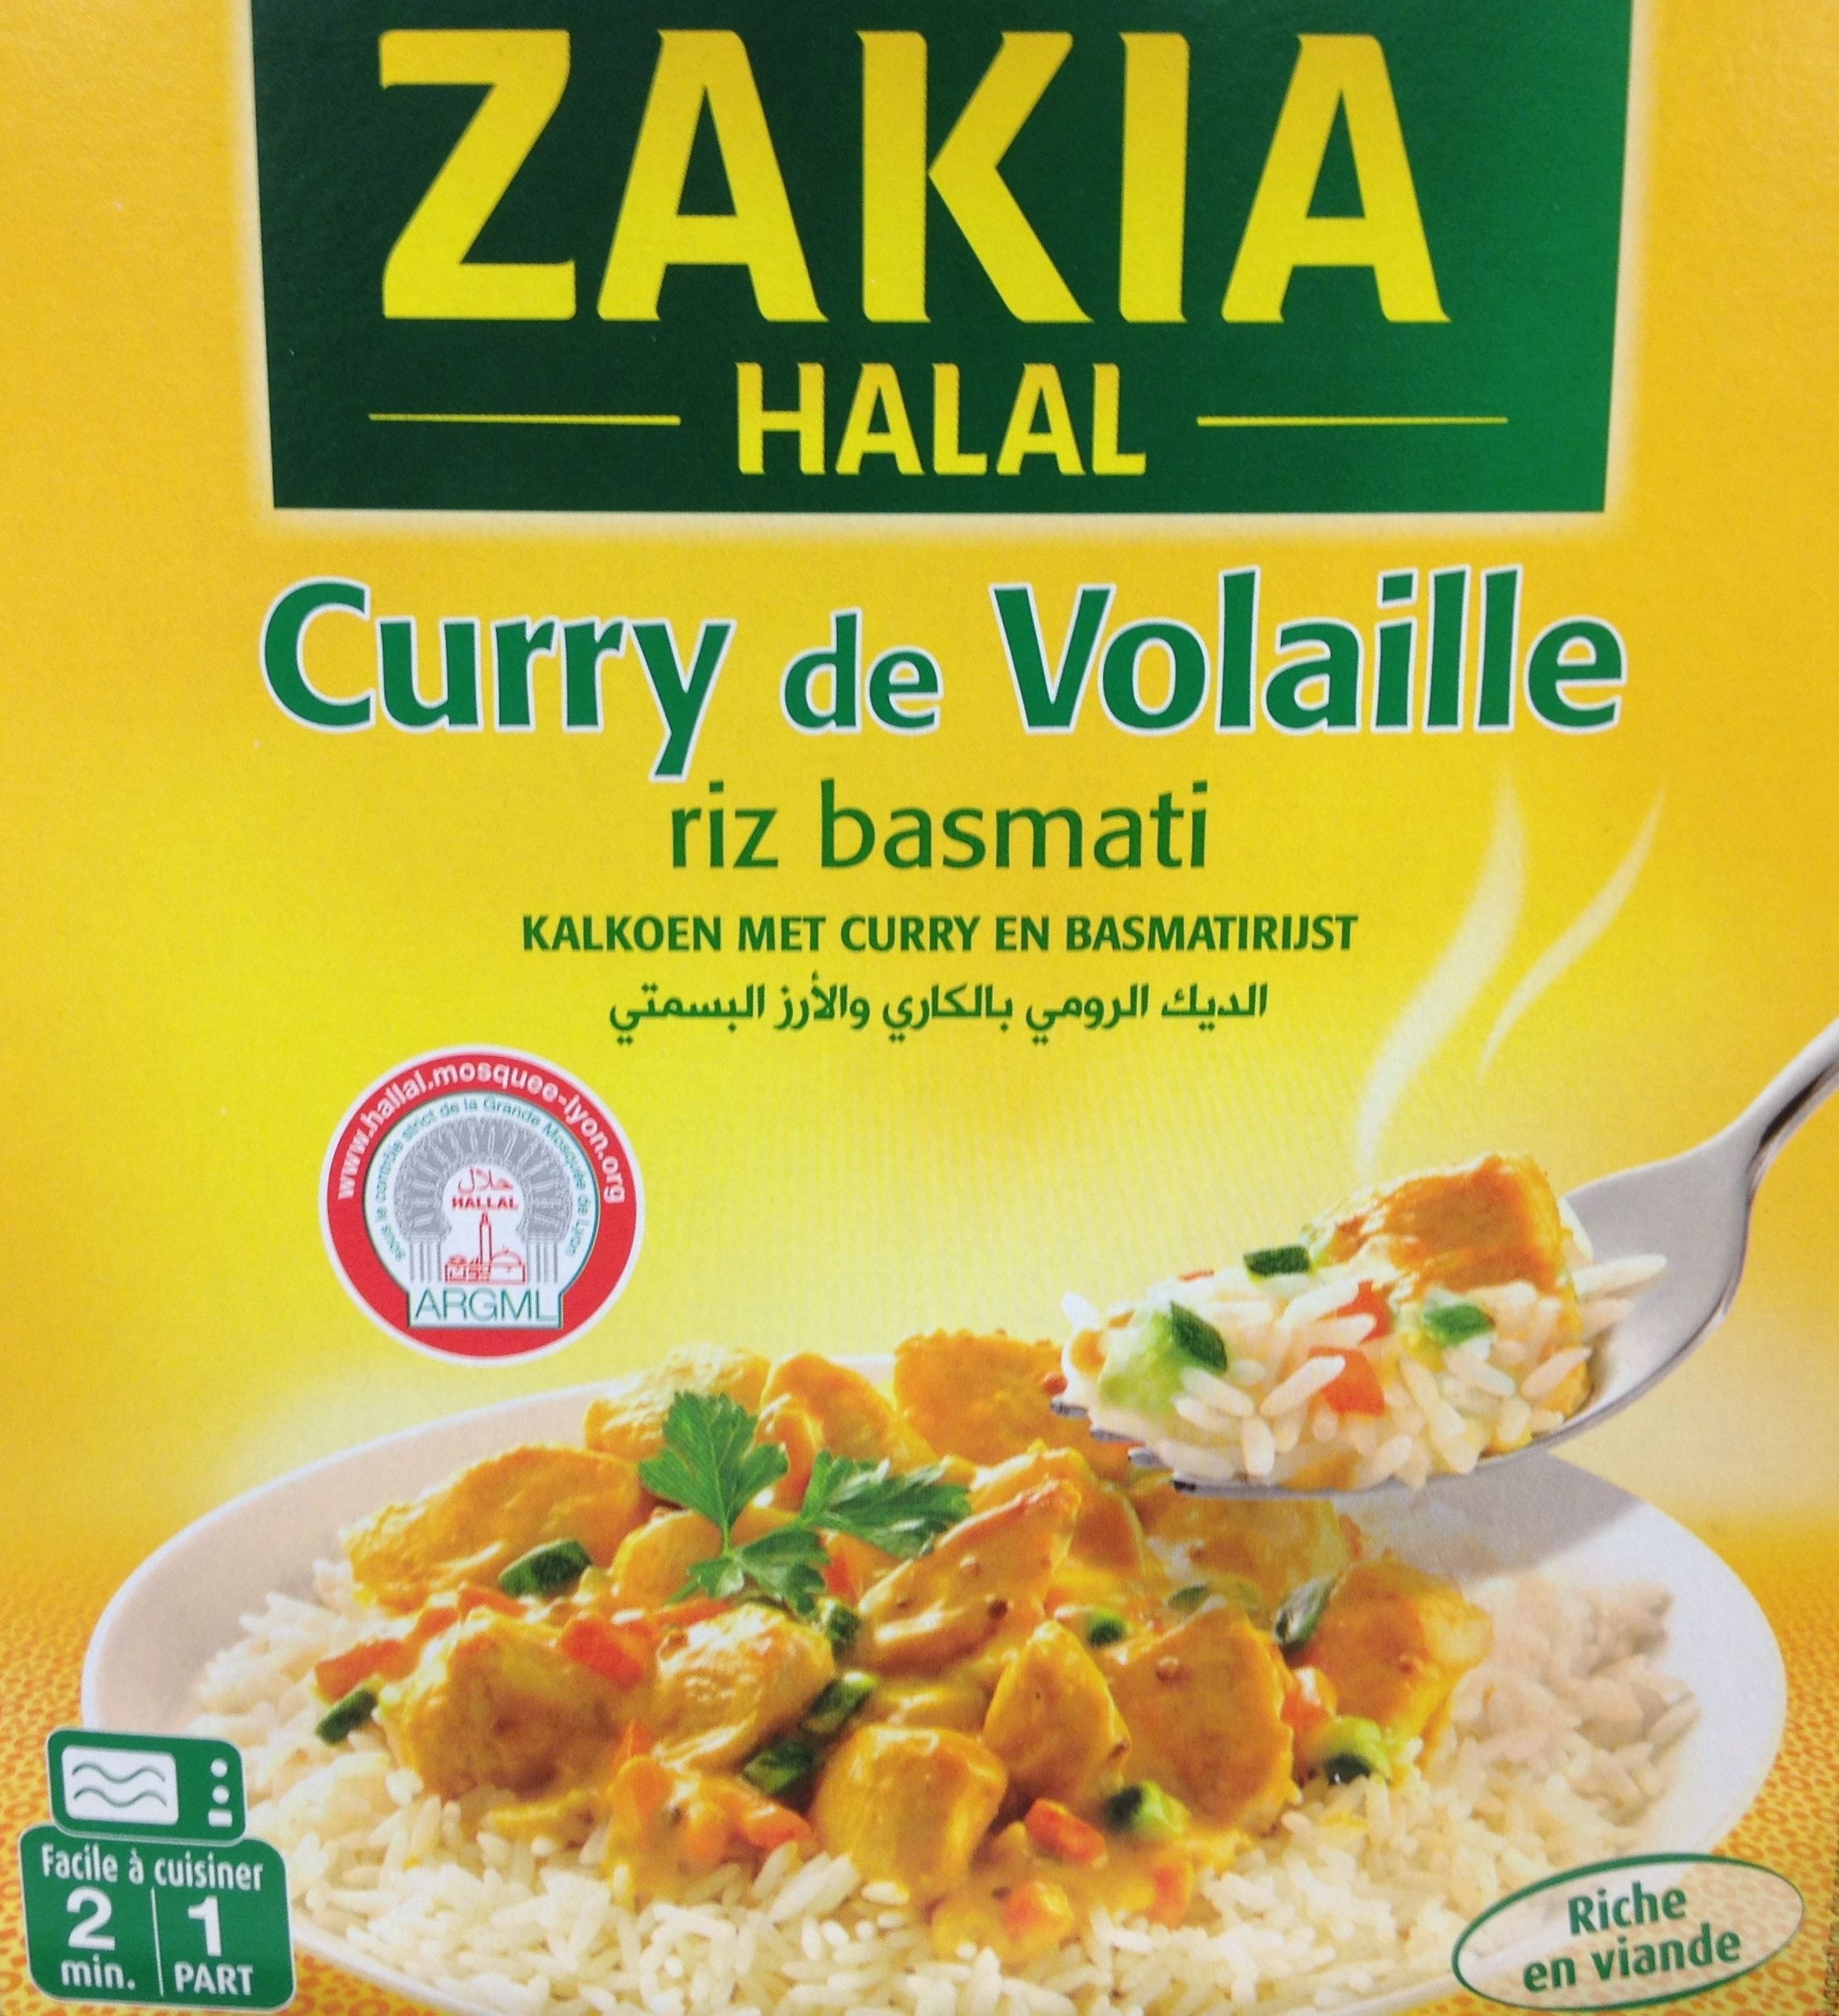 Curry de Volaille riz basmati - Halal - Product - fr